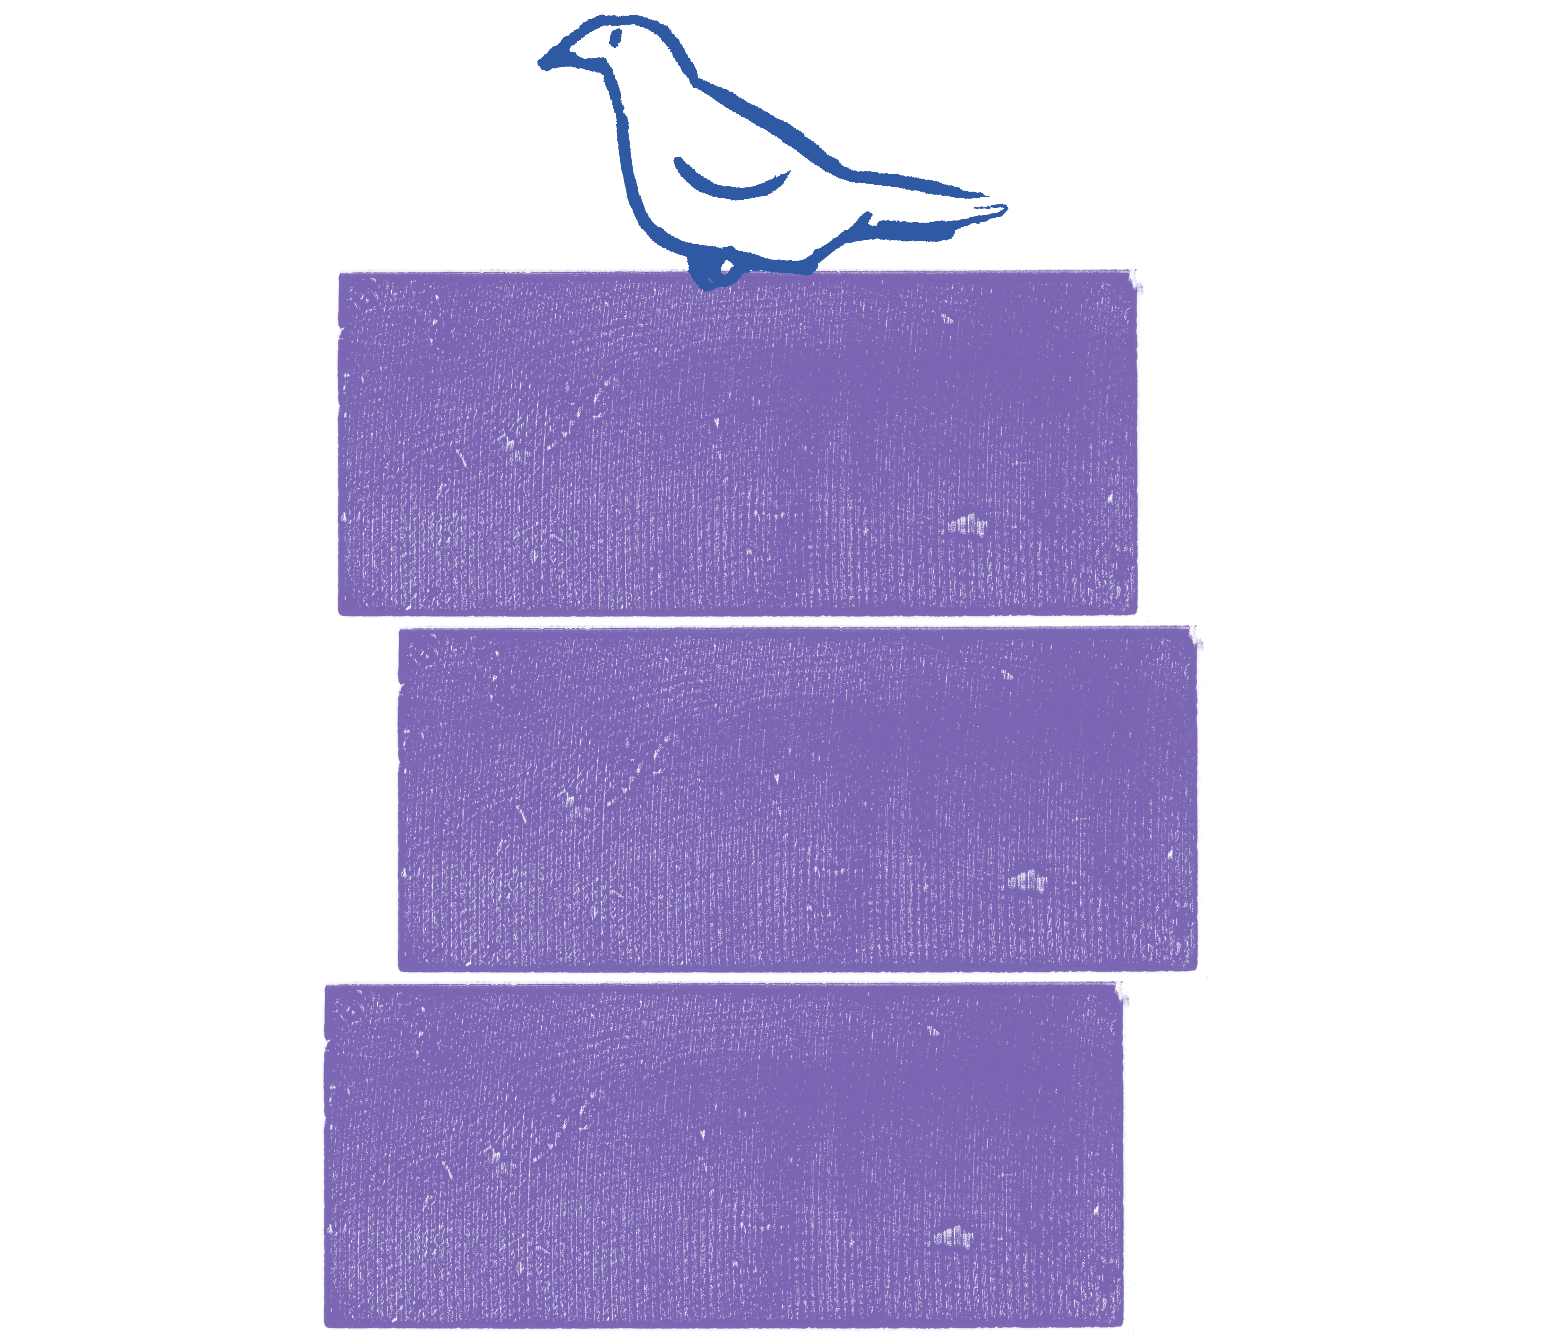 Illustration of a stack of blocks